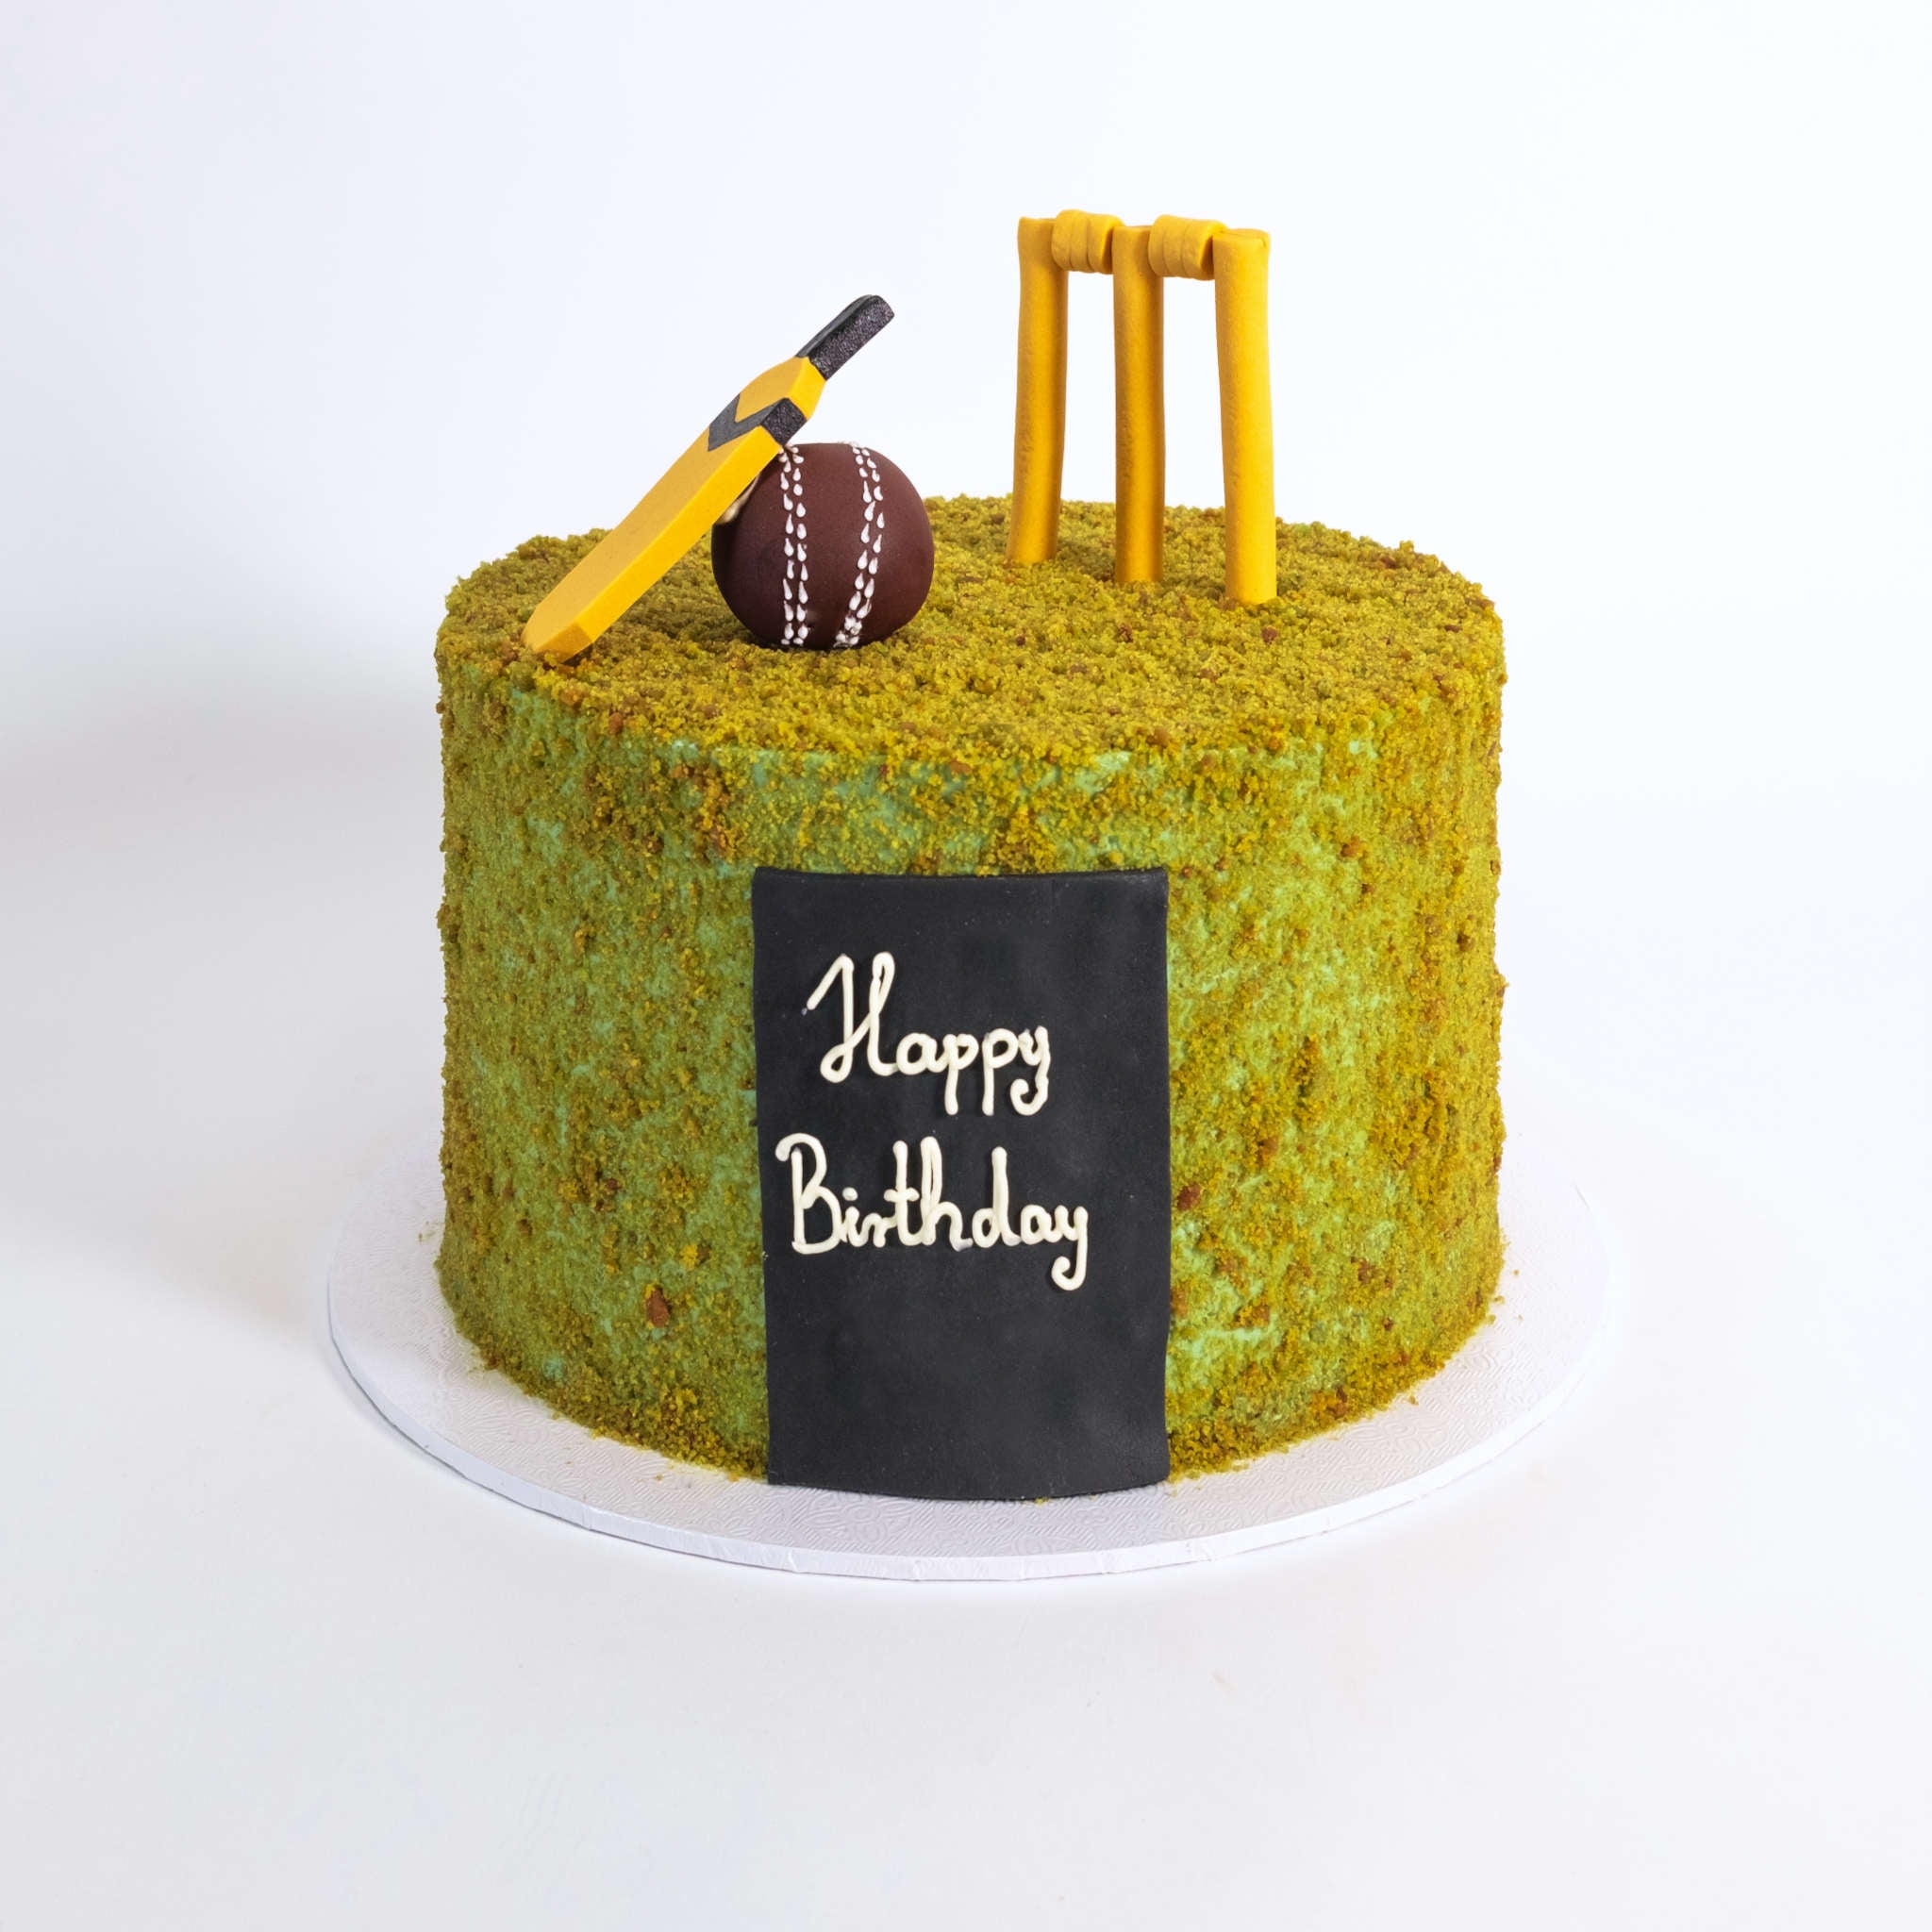 Cricket birthday cake | Cricket birthday cake, Cricket cake, Birthday baking